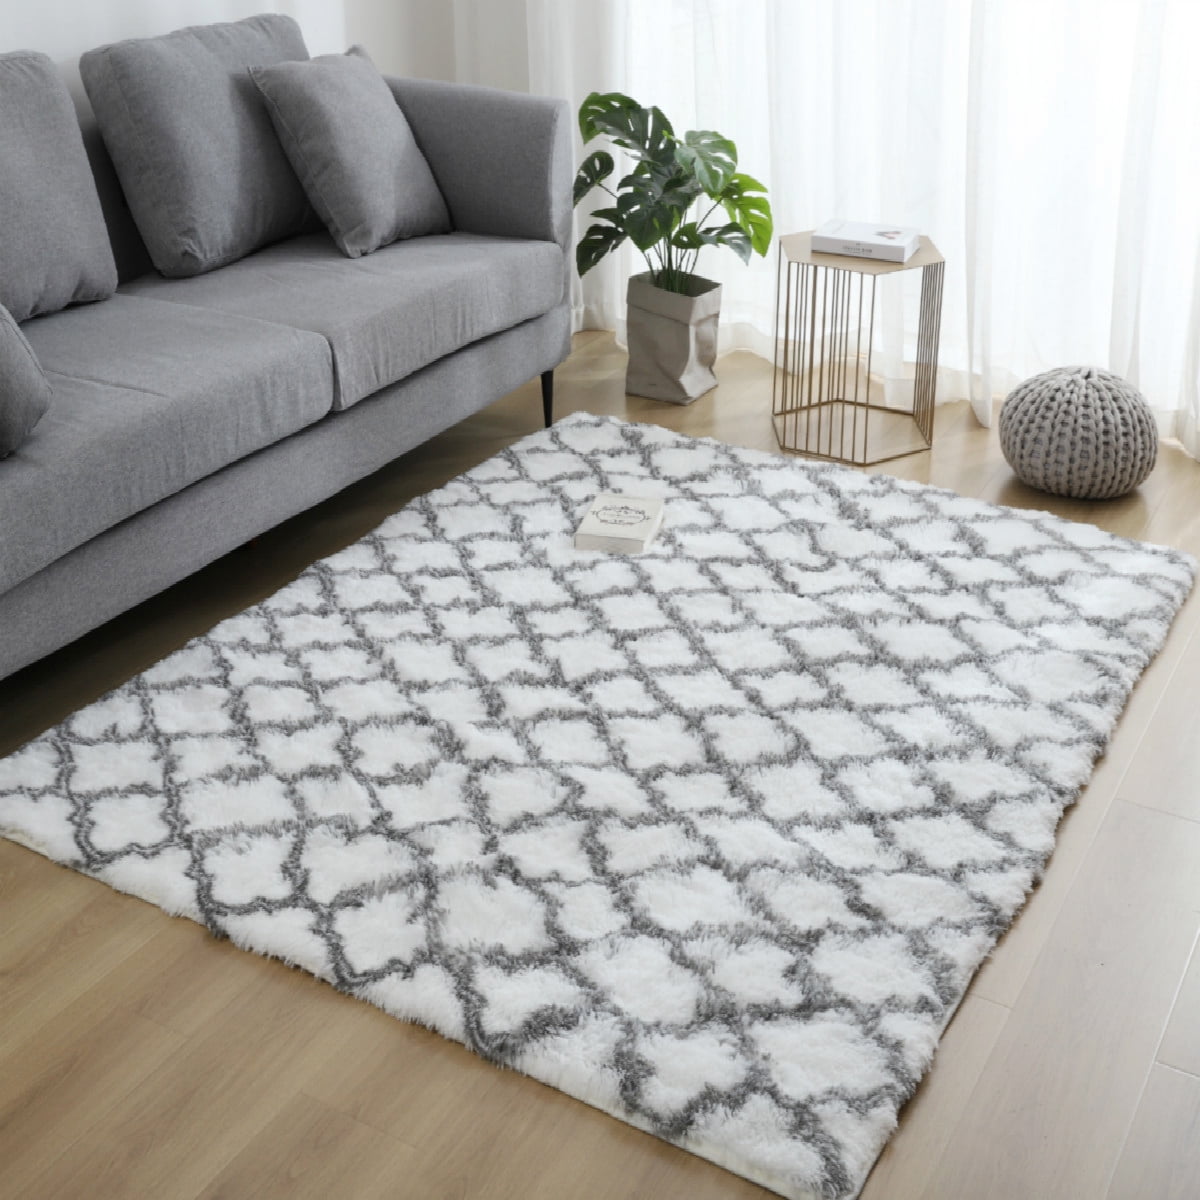 Large Fluffy Rugs Anti-Skid Shaggy Area Rug Home Carpet Living Room Floor Mats 